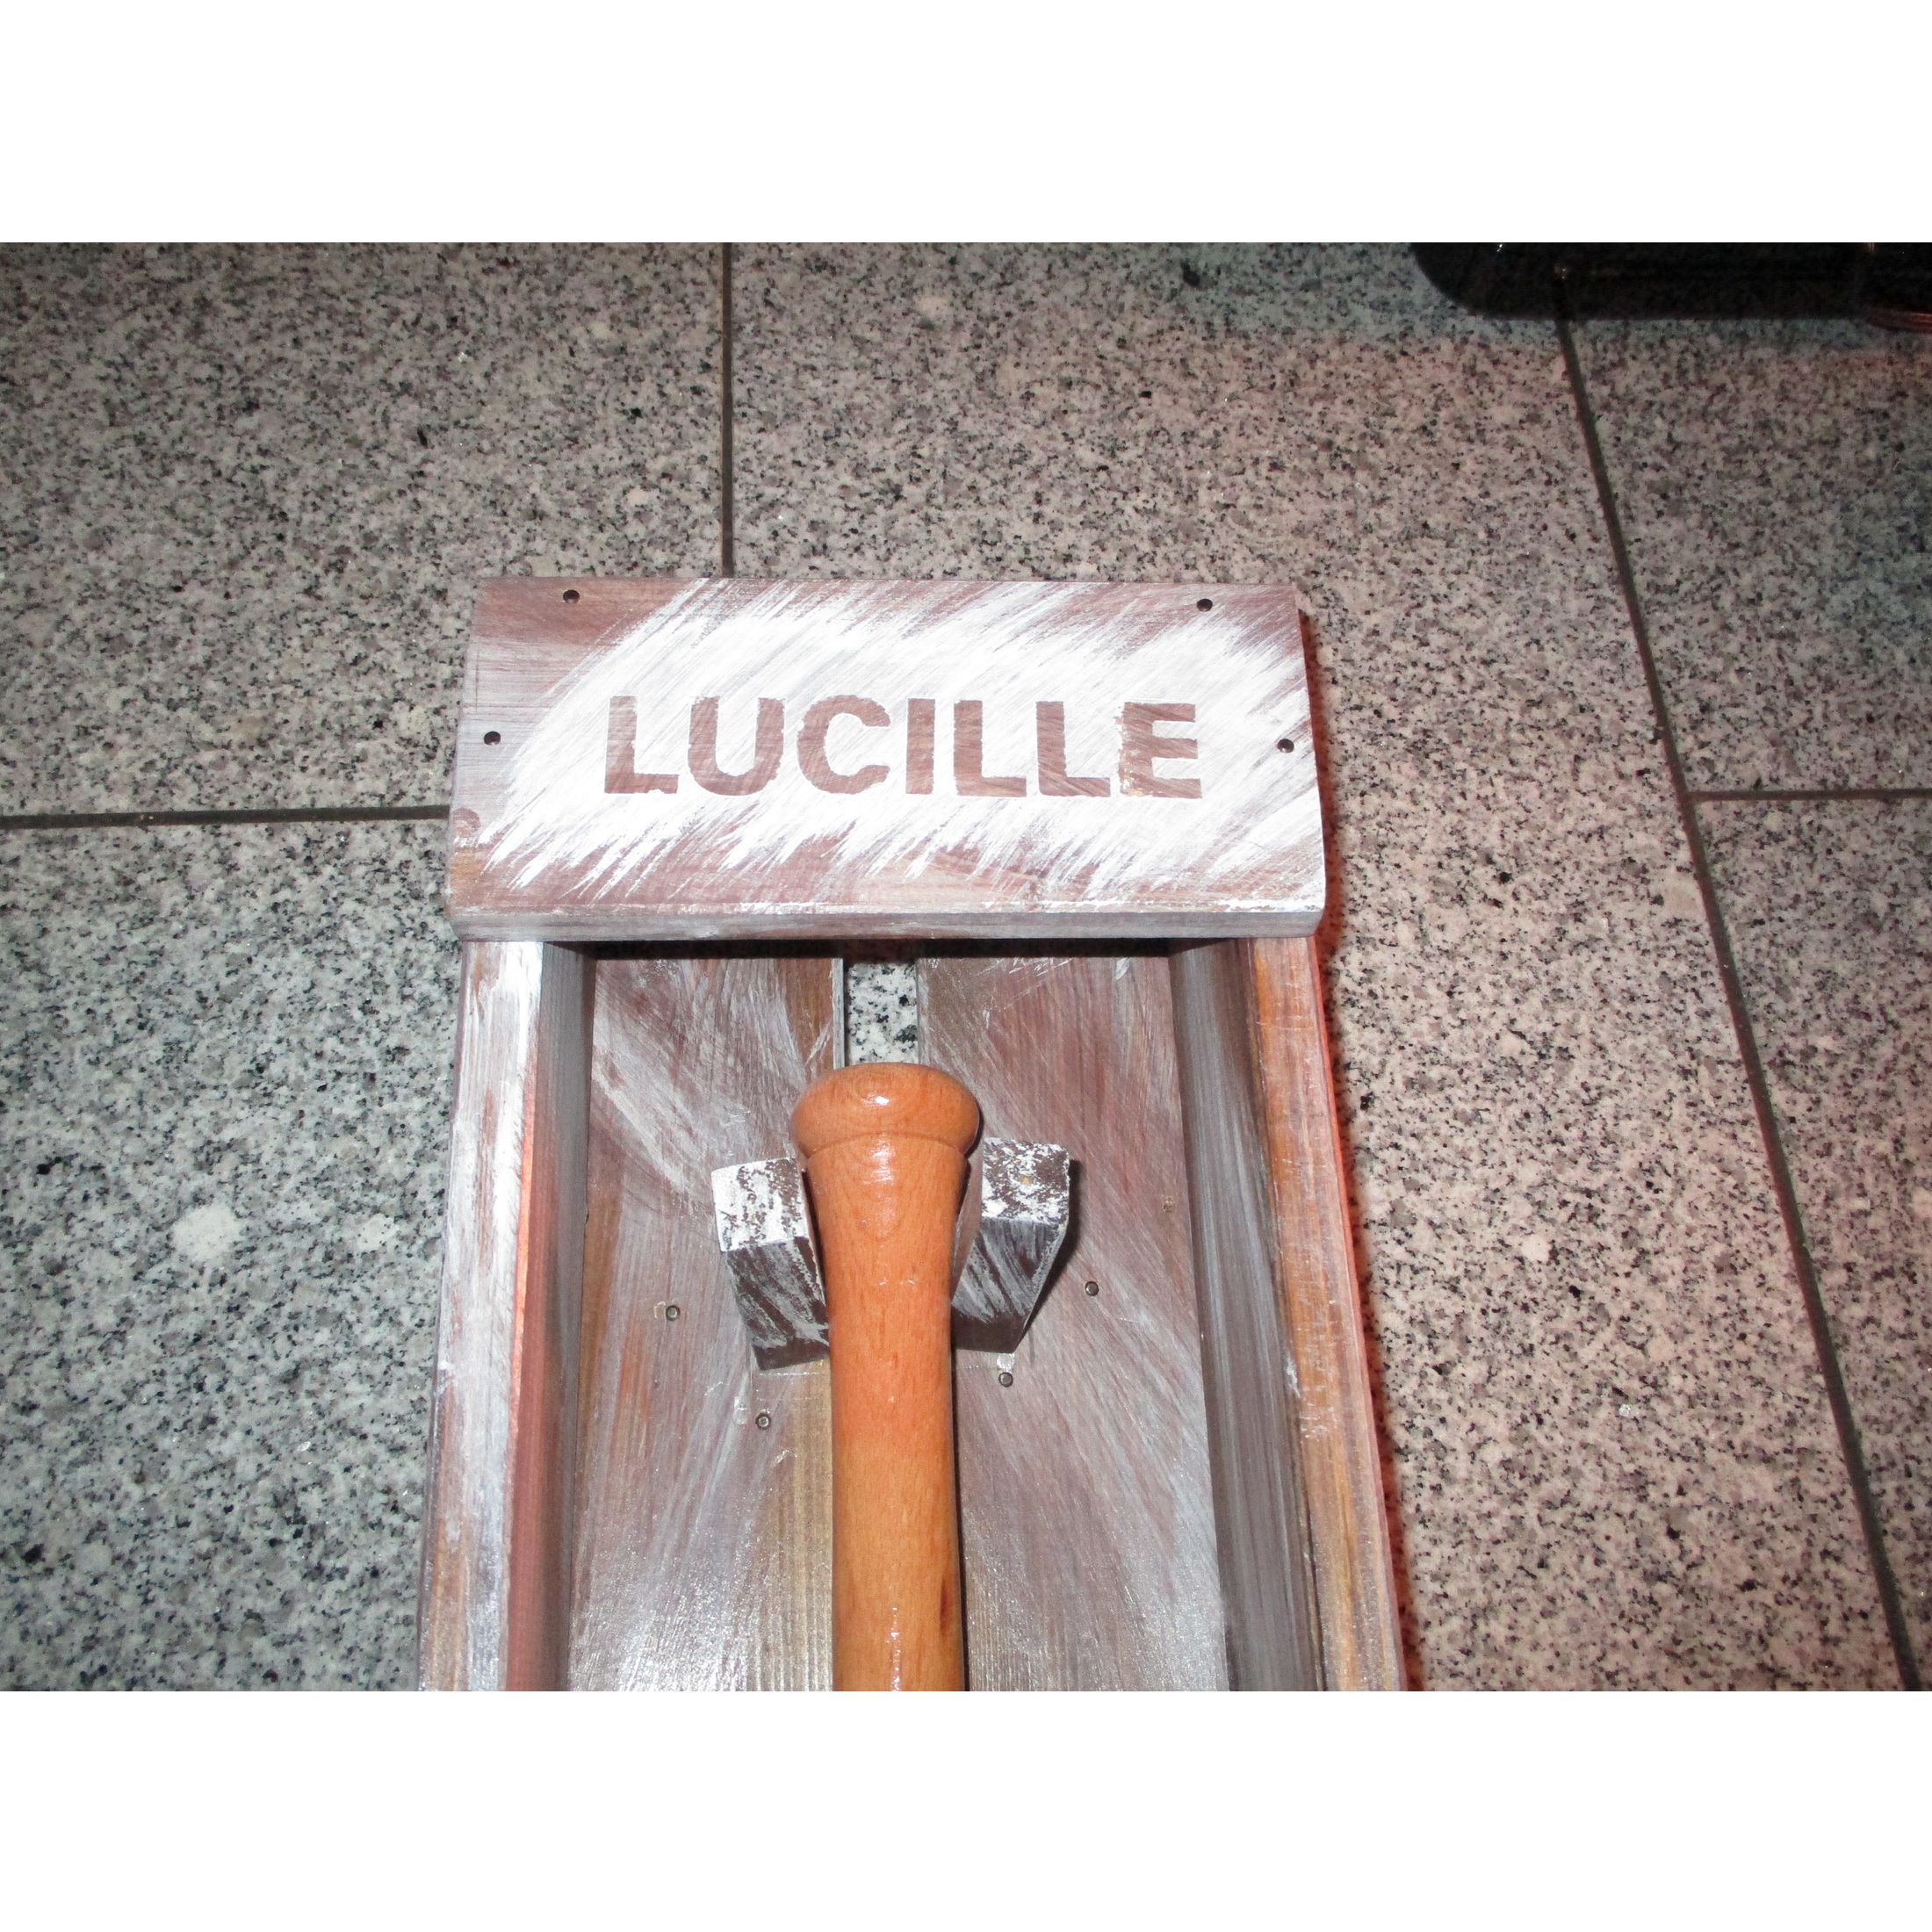 The Walking Dead Negan Baseball Schläger Lucille in Haltebox